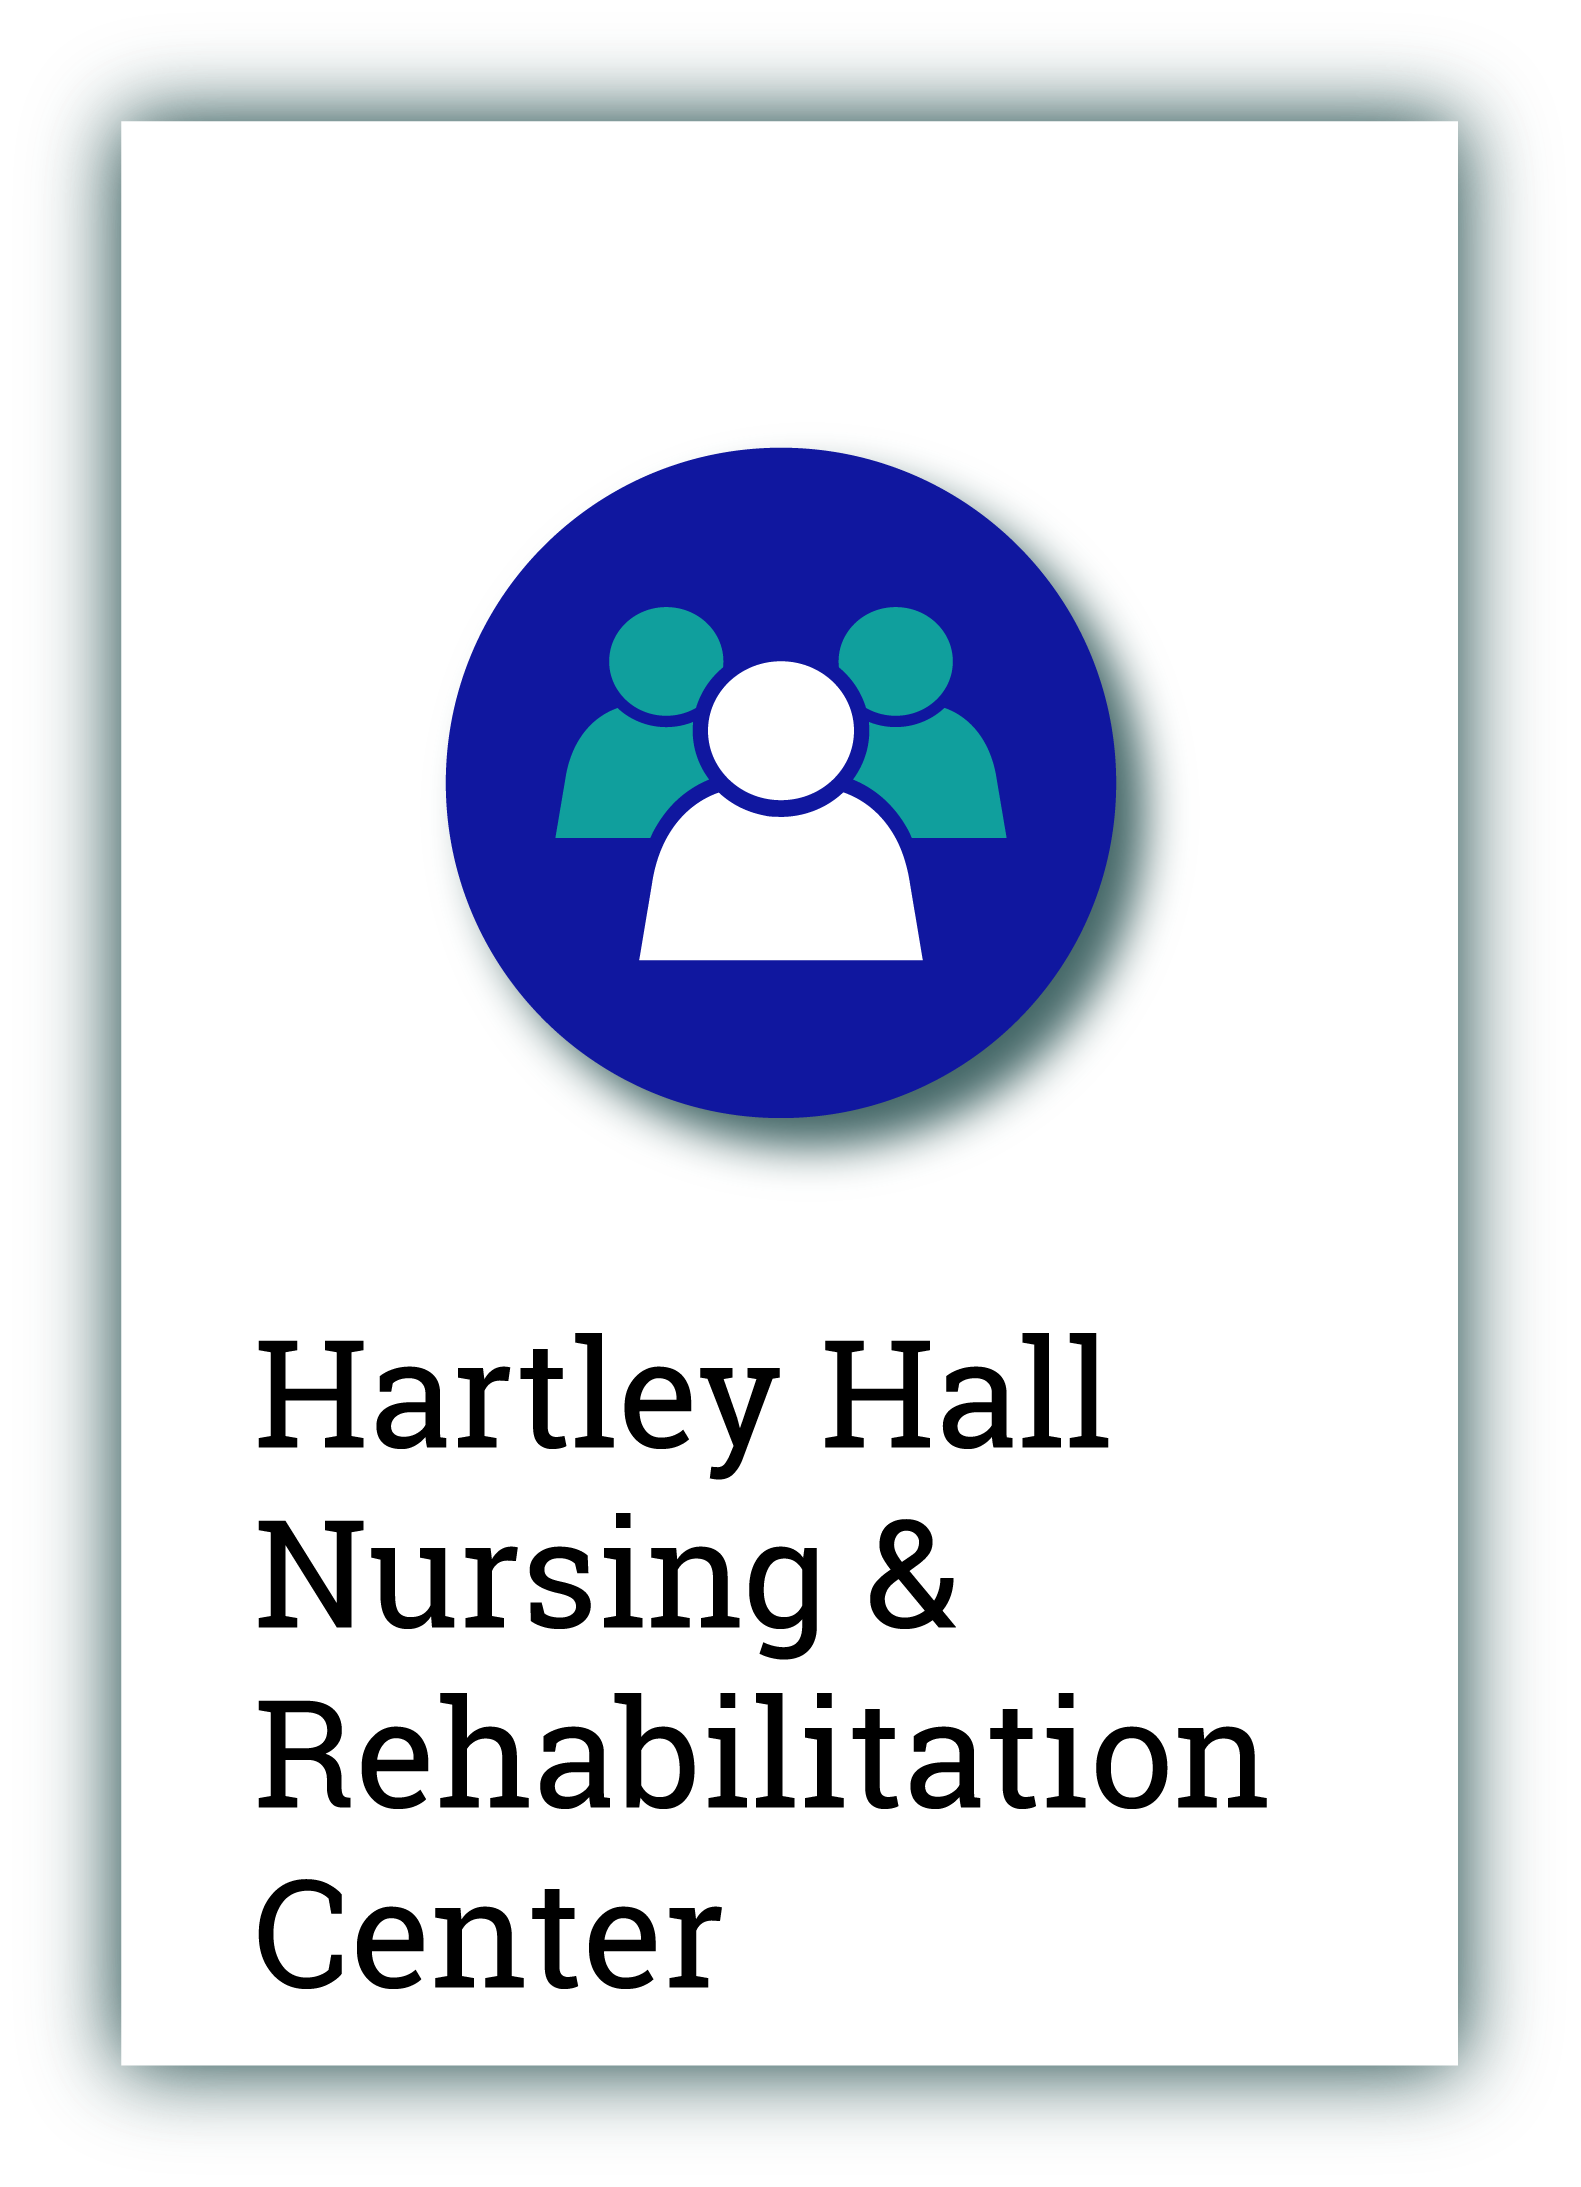 Hartley Hall Nursing & Rehabilitation Center